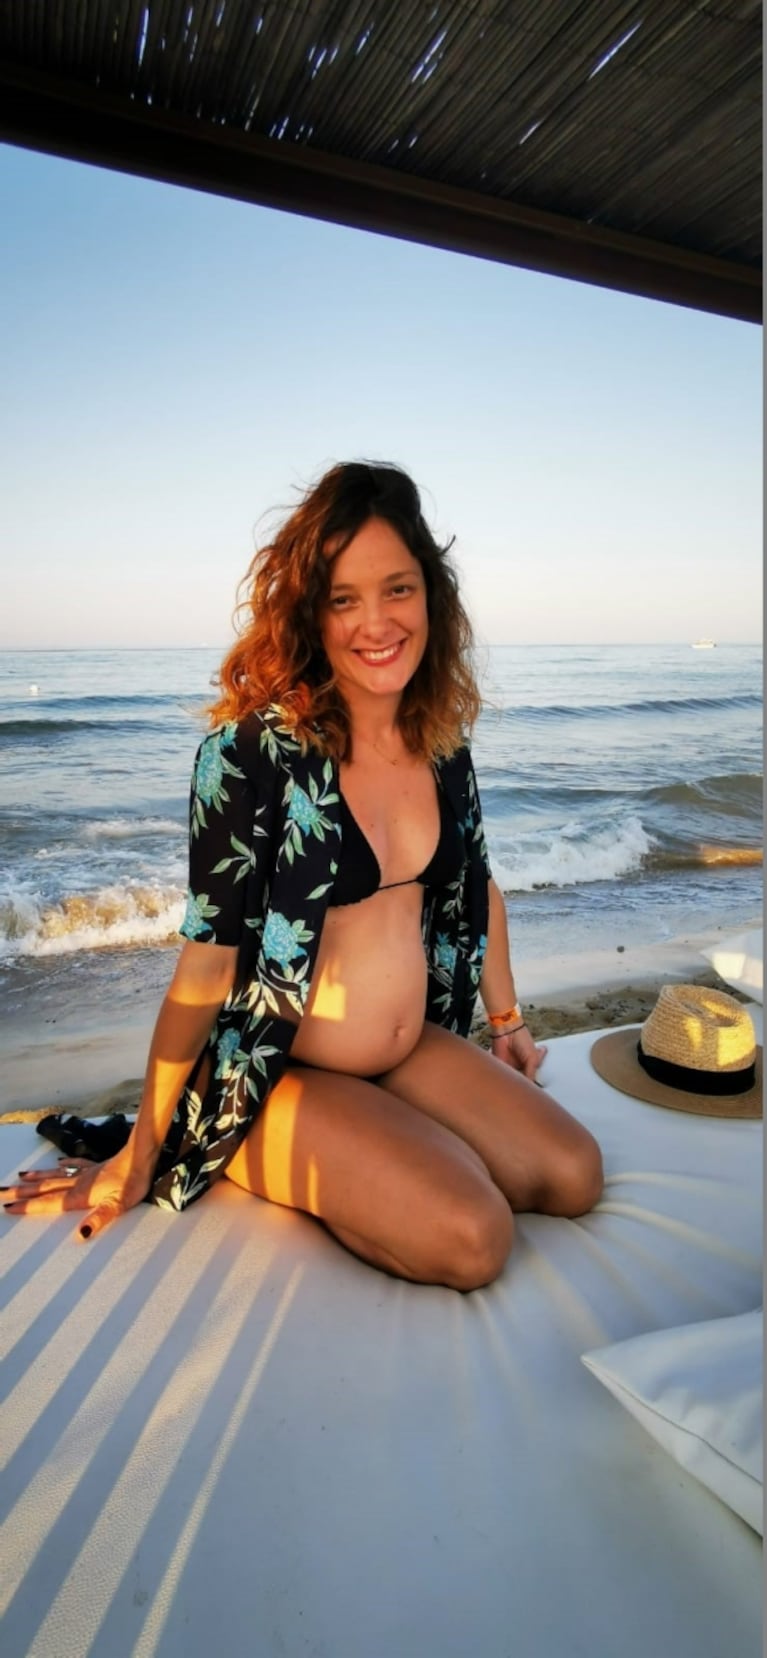 Sabrina Artaza, embarazada de tres meses: "Mantendré la tradición francesa de no decir el nombre hasta parir"